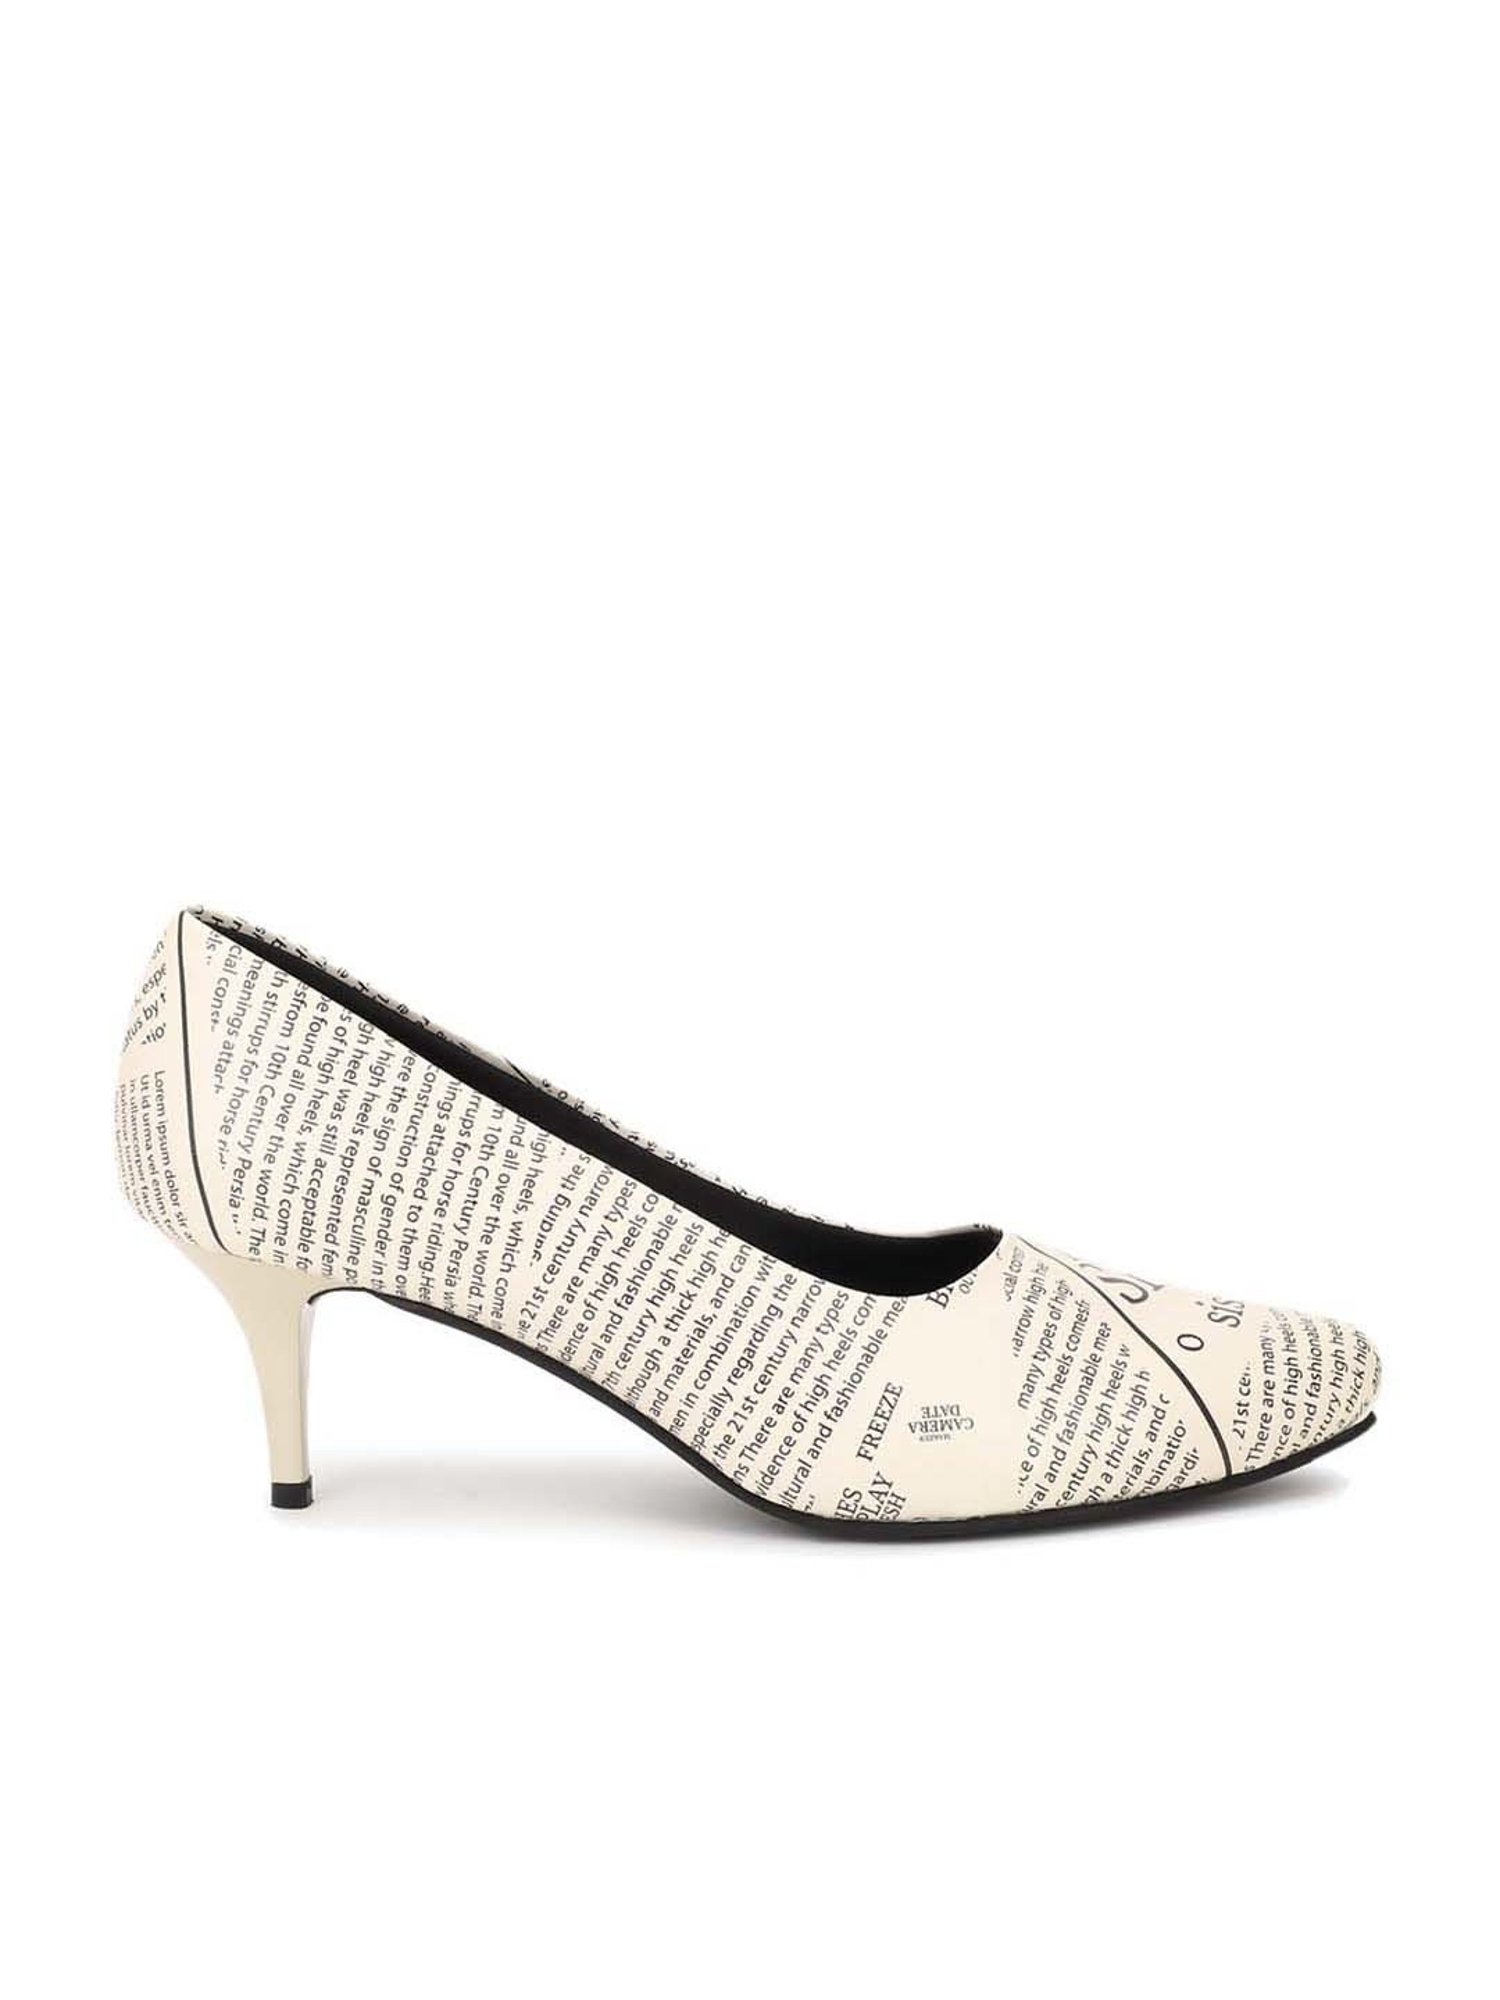 5.5 Inch Slim High Heels for Men/women with High Heels Shoes Nightclub  Round Toe | eBay